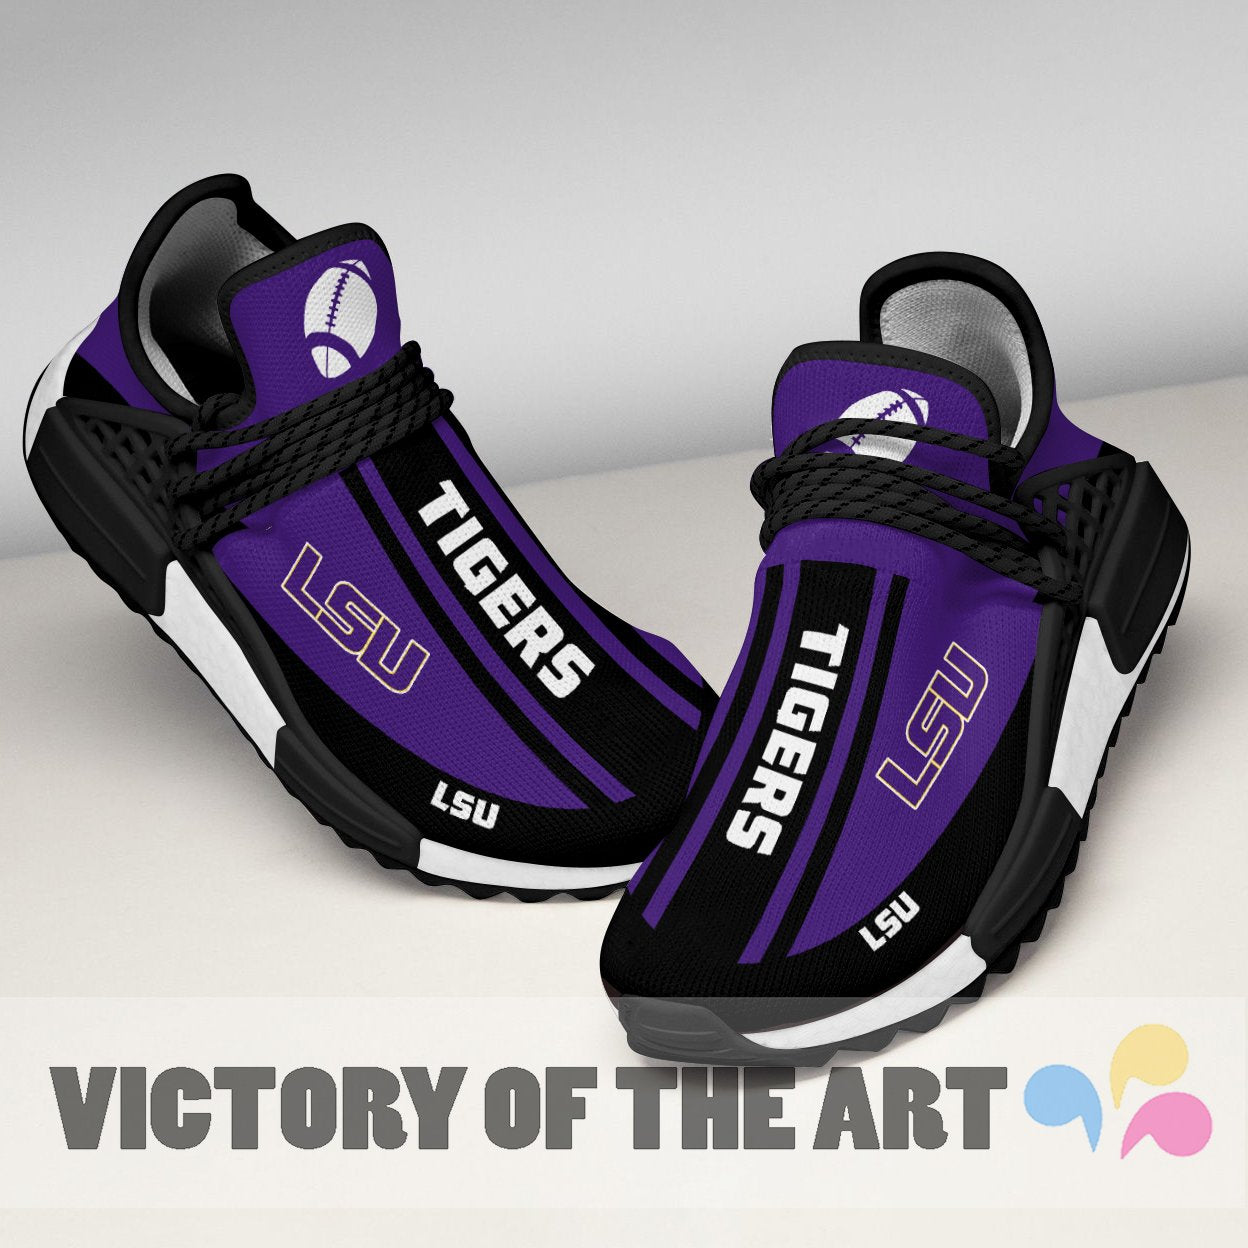 human race shoes purple